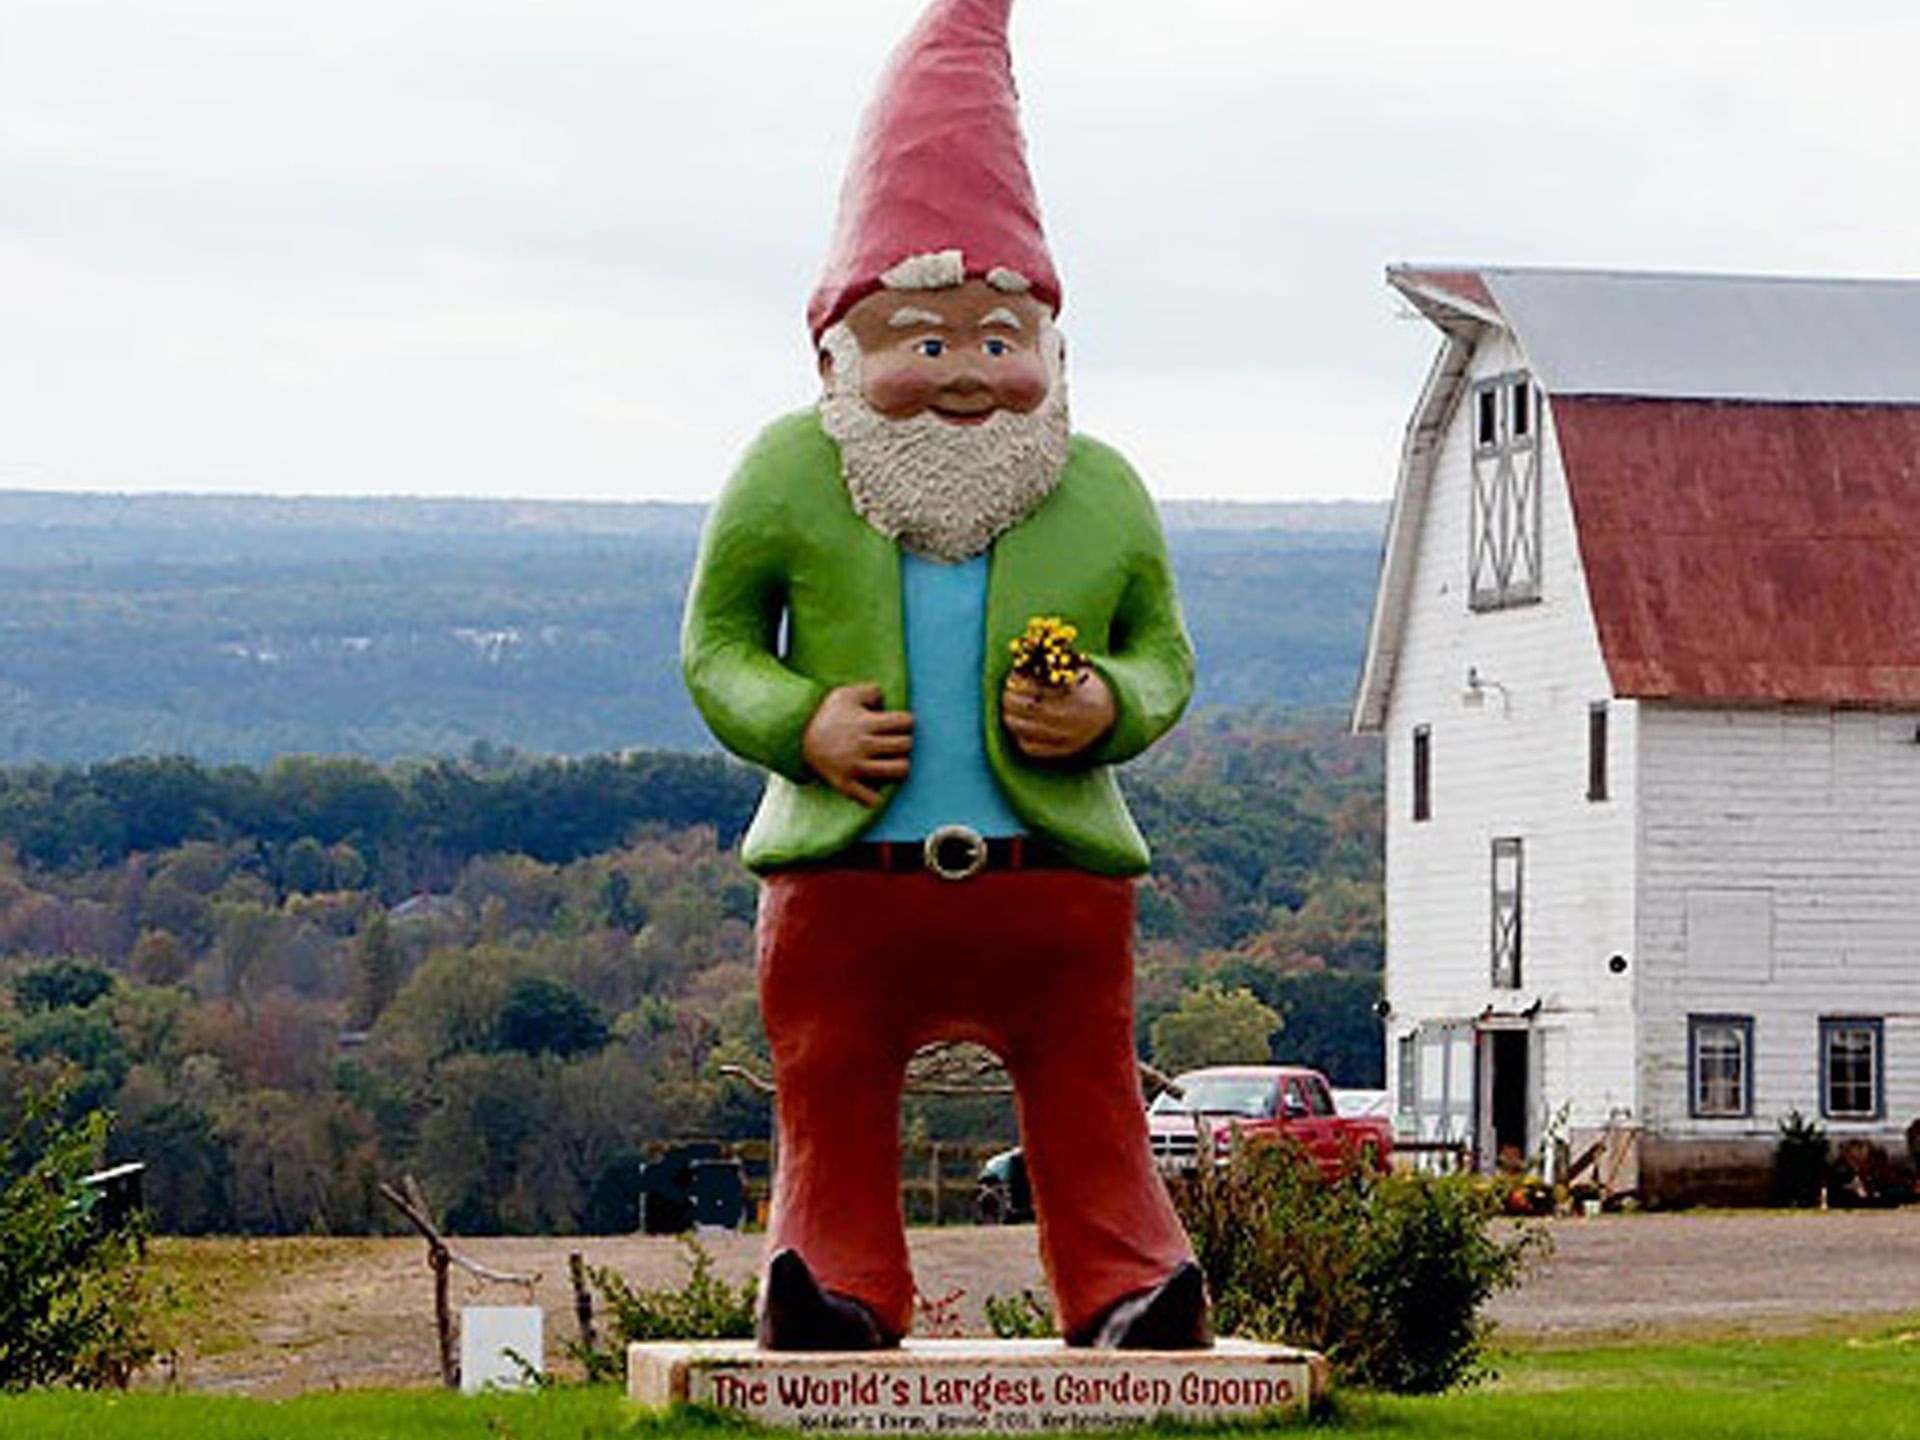 Santa statue of Kelder's Farm Market near Honor’s Haven Retreat